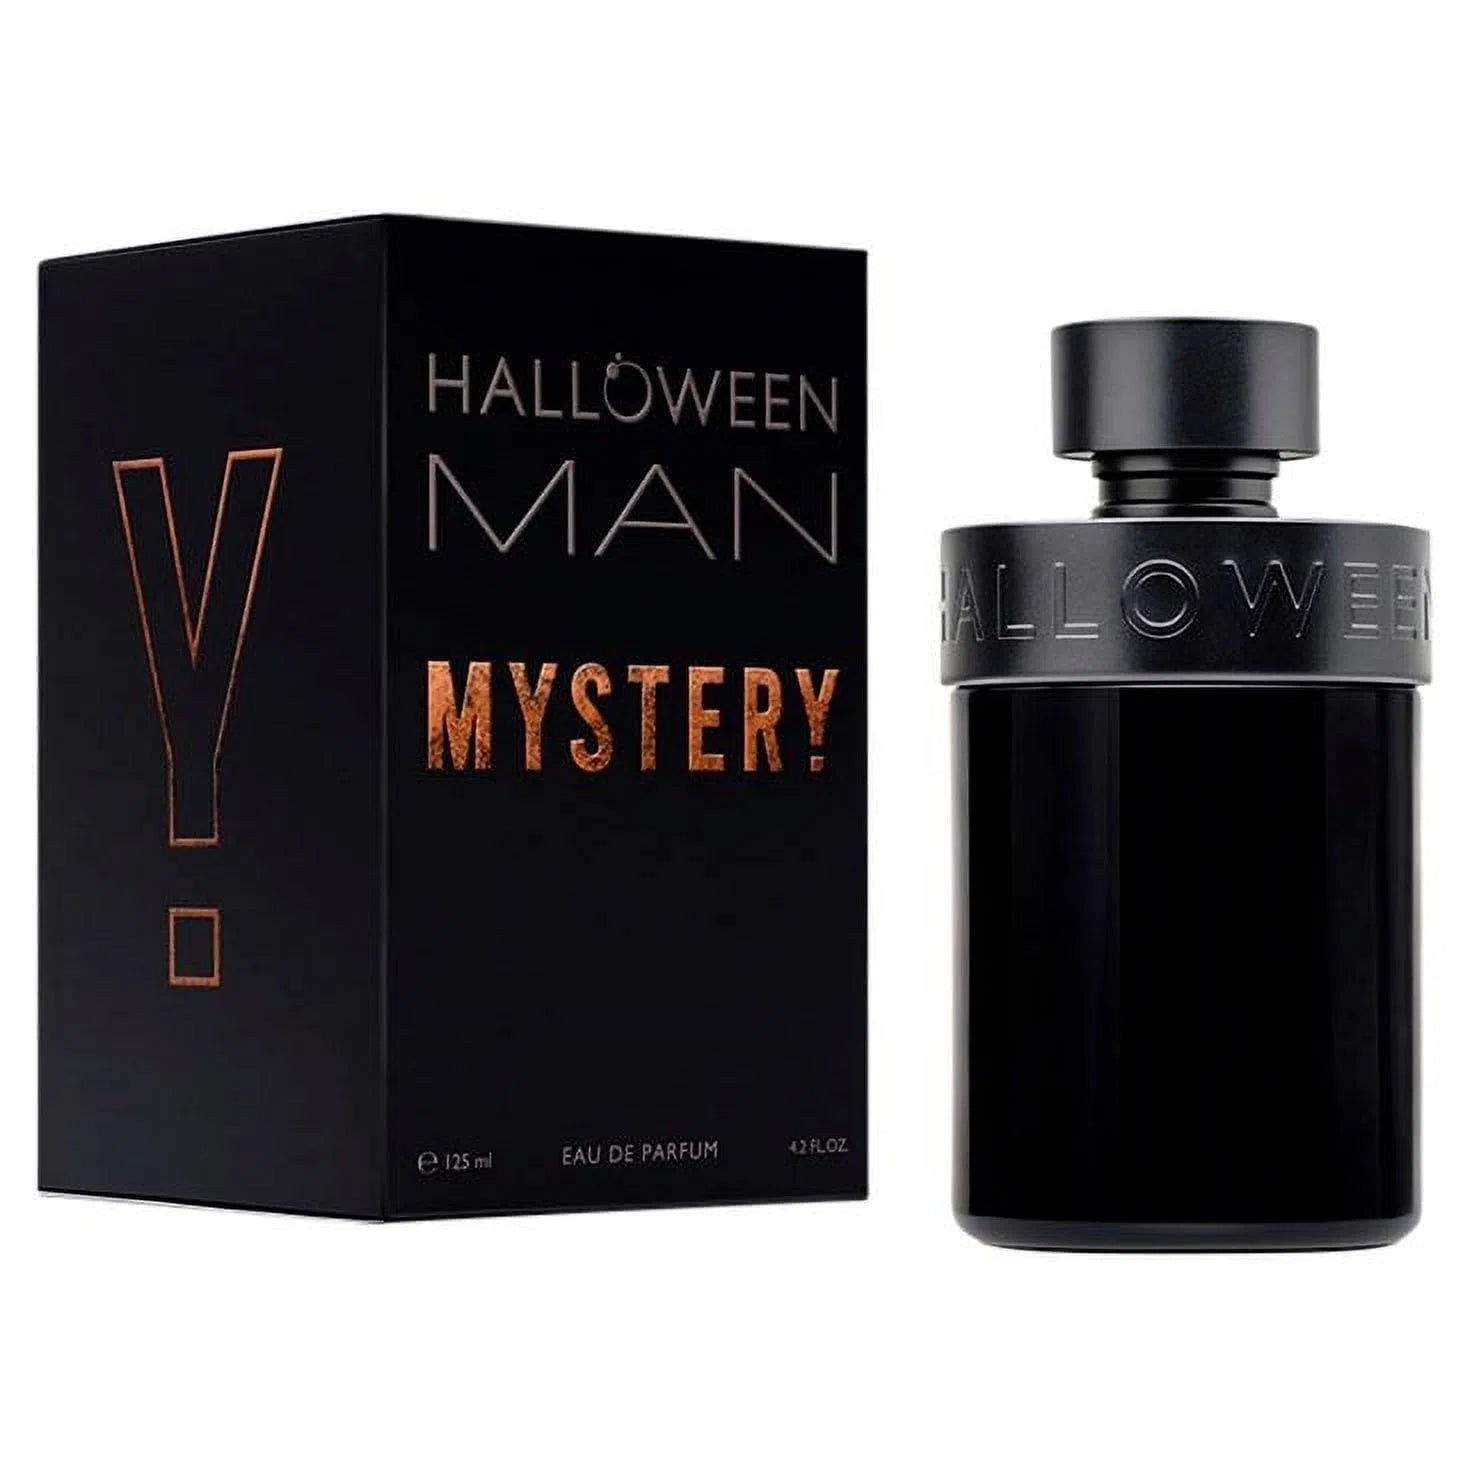 Perfume J del Pozo Halloween Man Mystery EDP (M) / 125 ml - 8431754008578- Prive Perfumes Honduras